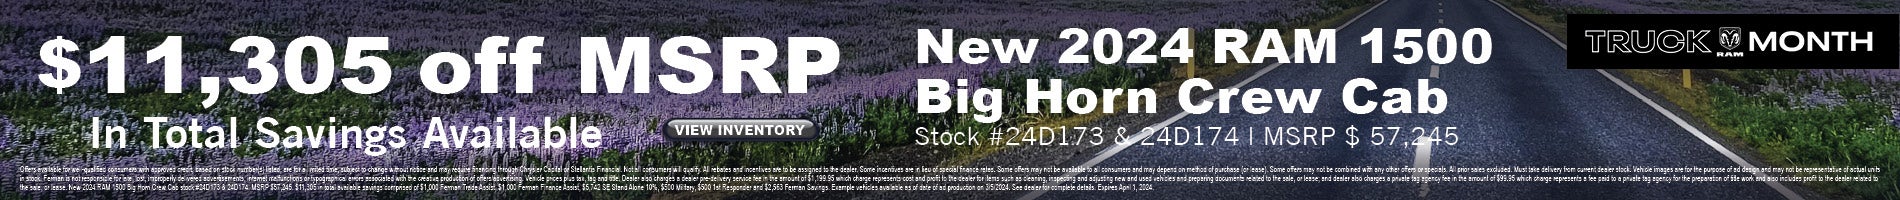 March Savings on New 2024 RAM 1500 Big Horn